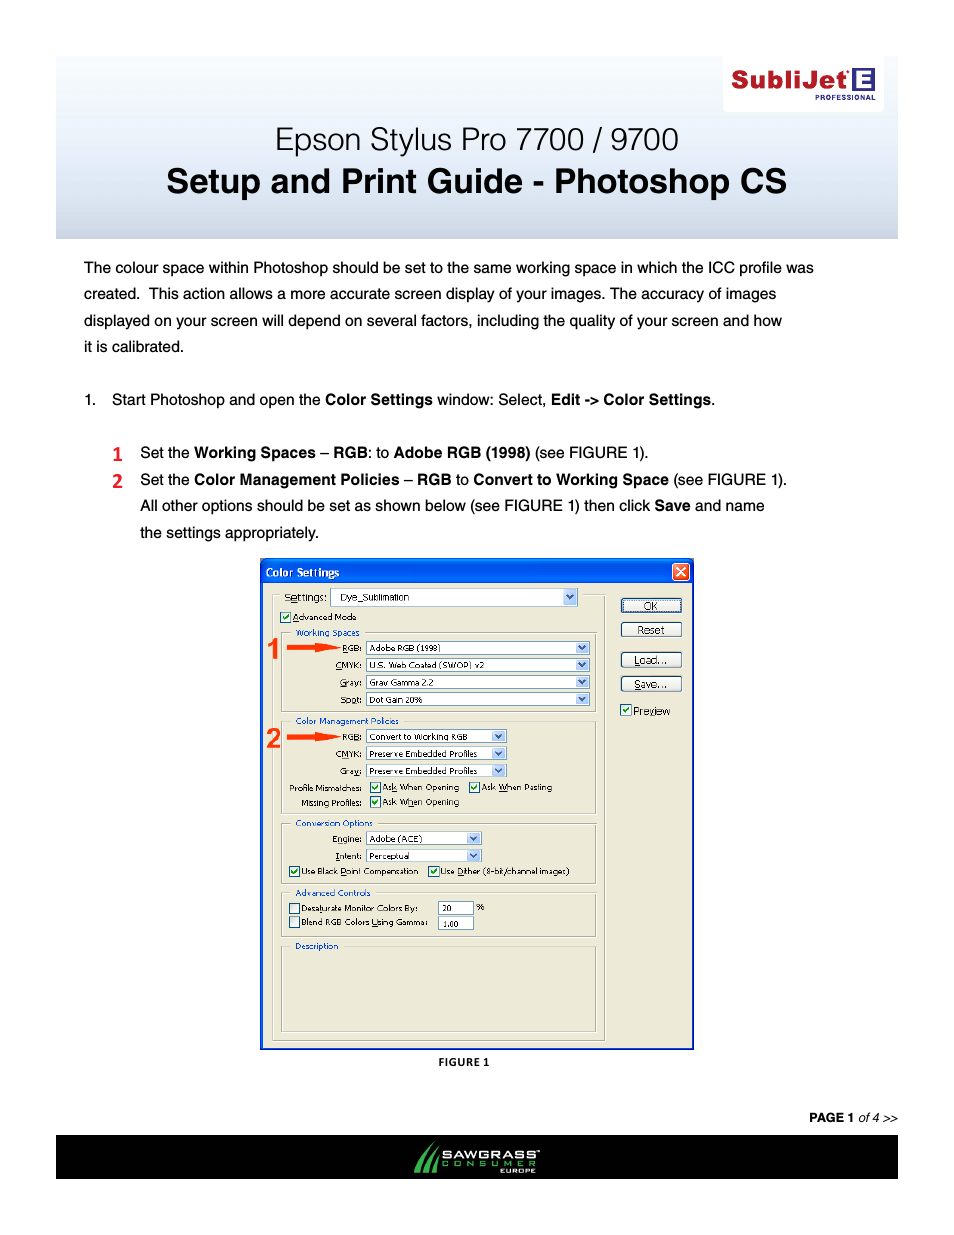 SubliJet E Epson Stylus Pro 7700 (Windows ICC Profile Setup): Print & Setup Guide Photoshop CS